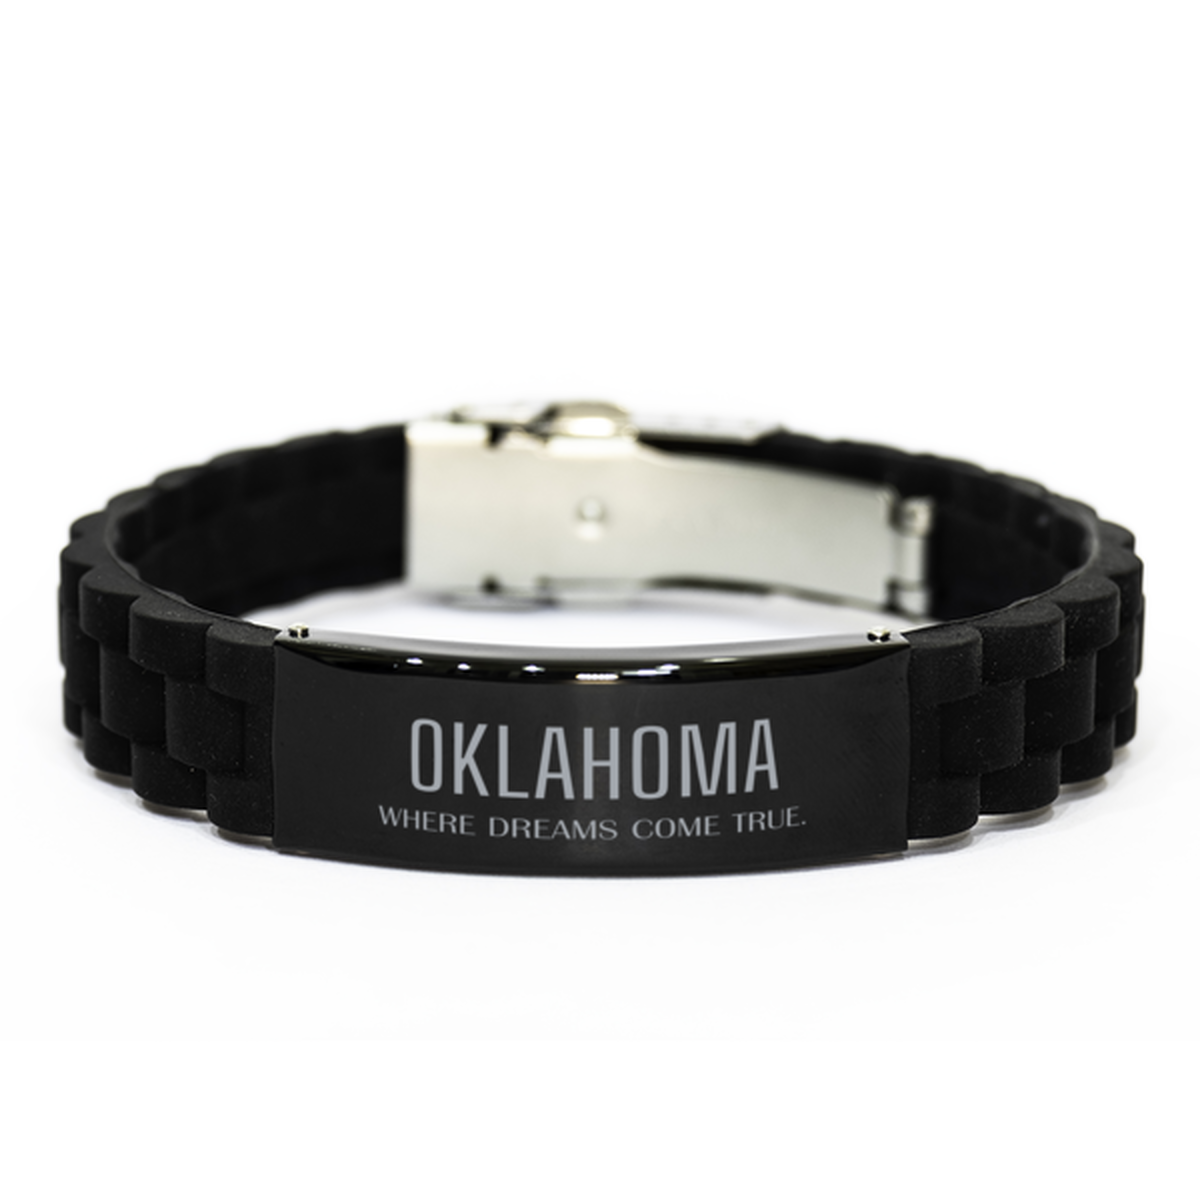 Love Oklahoma State Black Glidelock Clasp Bracelet, Oklahoma Where dreams come true, Birthday Inspirational Gifts For Oklahoma Men, Women, Friends